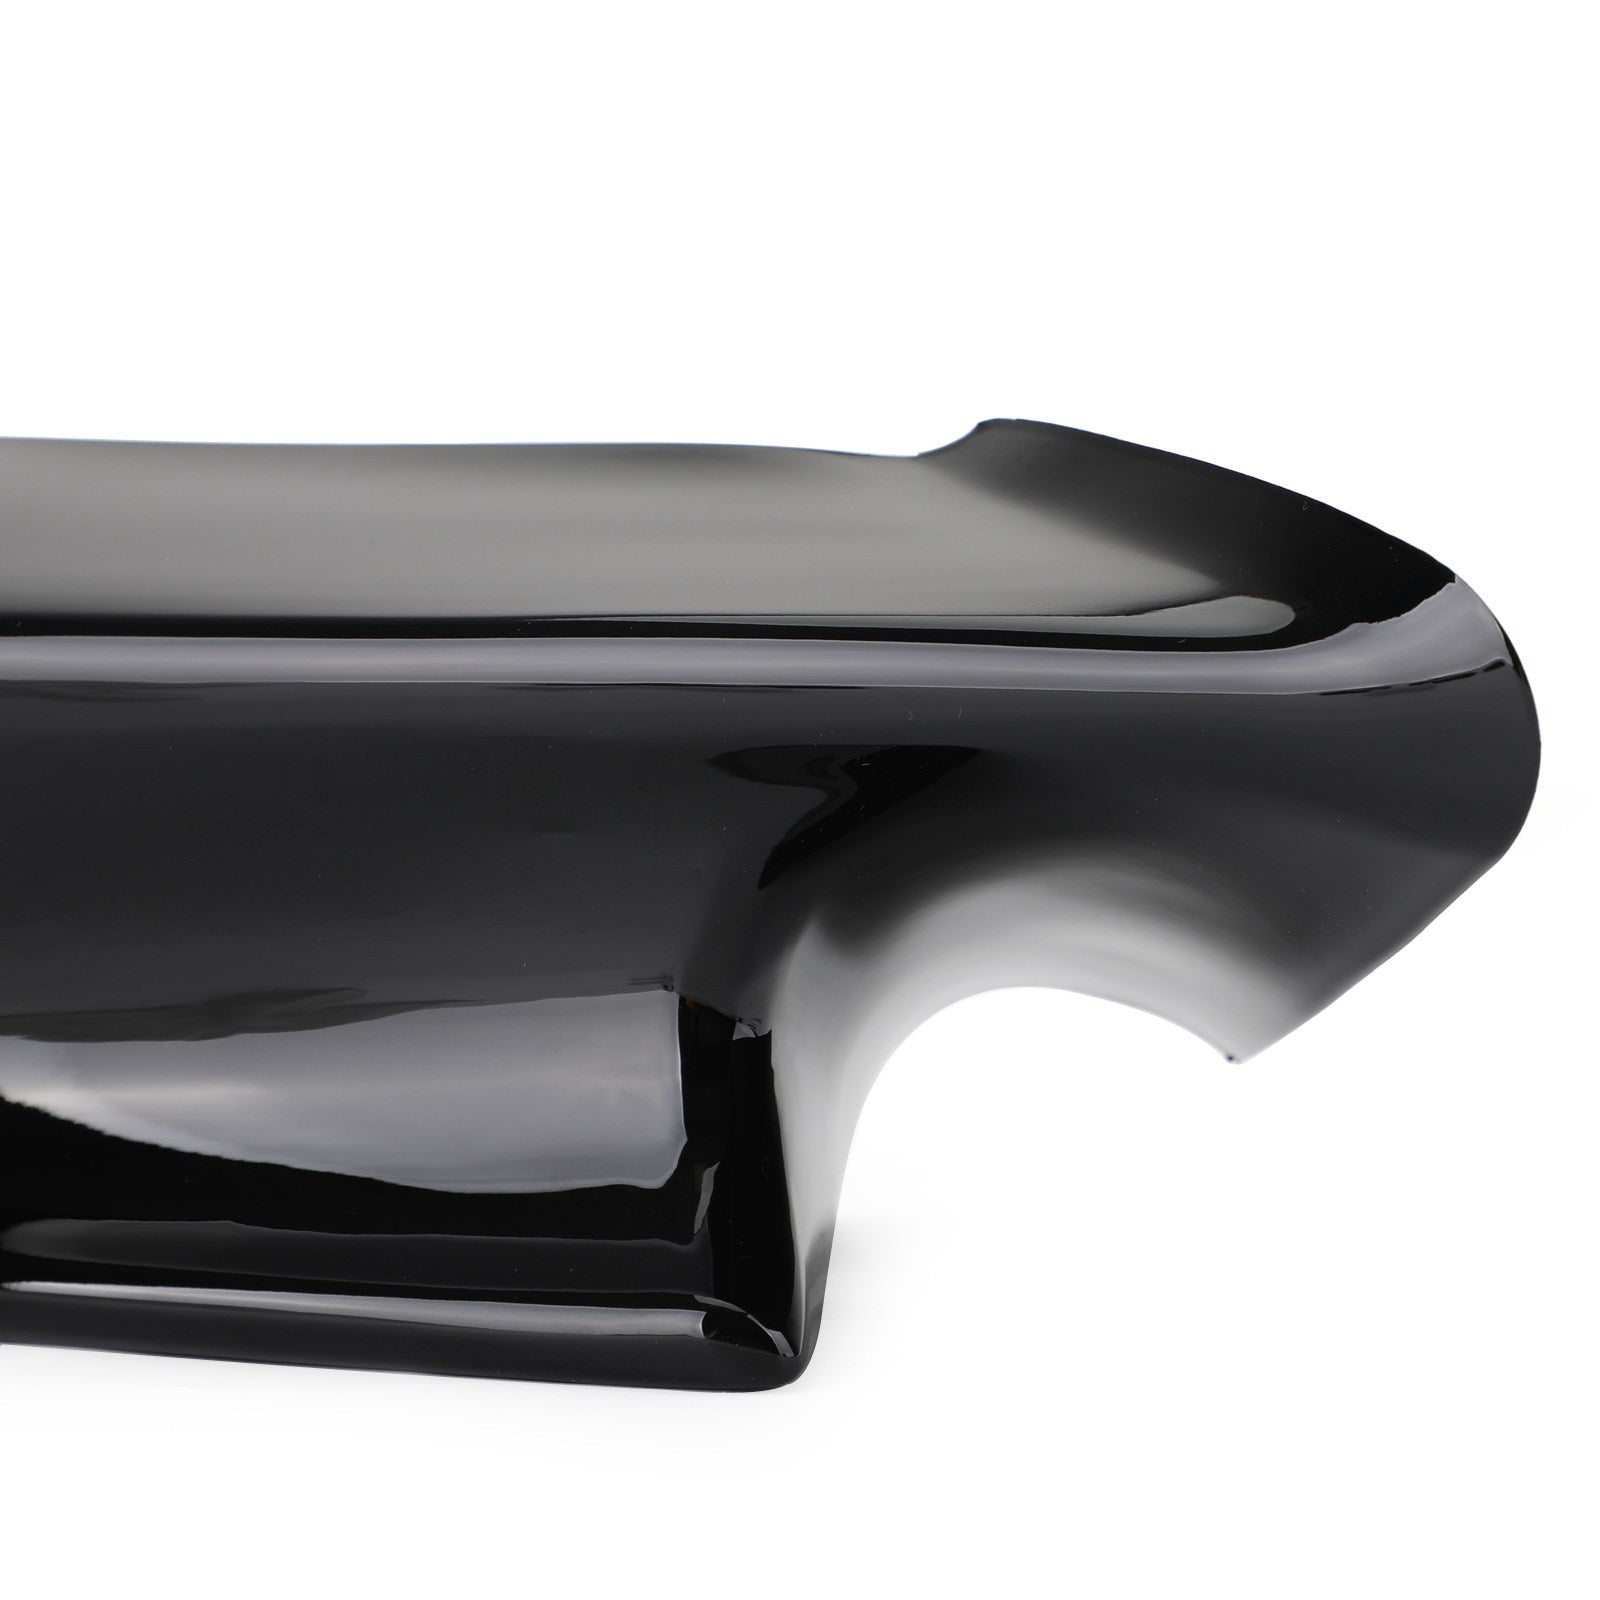 Separador de labios de parachoques delantero para BMW E90 E92 M3 rendimiento de competición 08-13 genérico